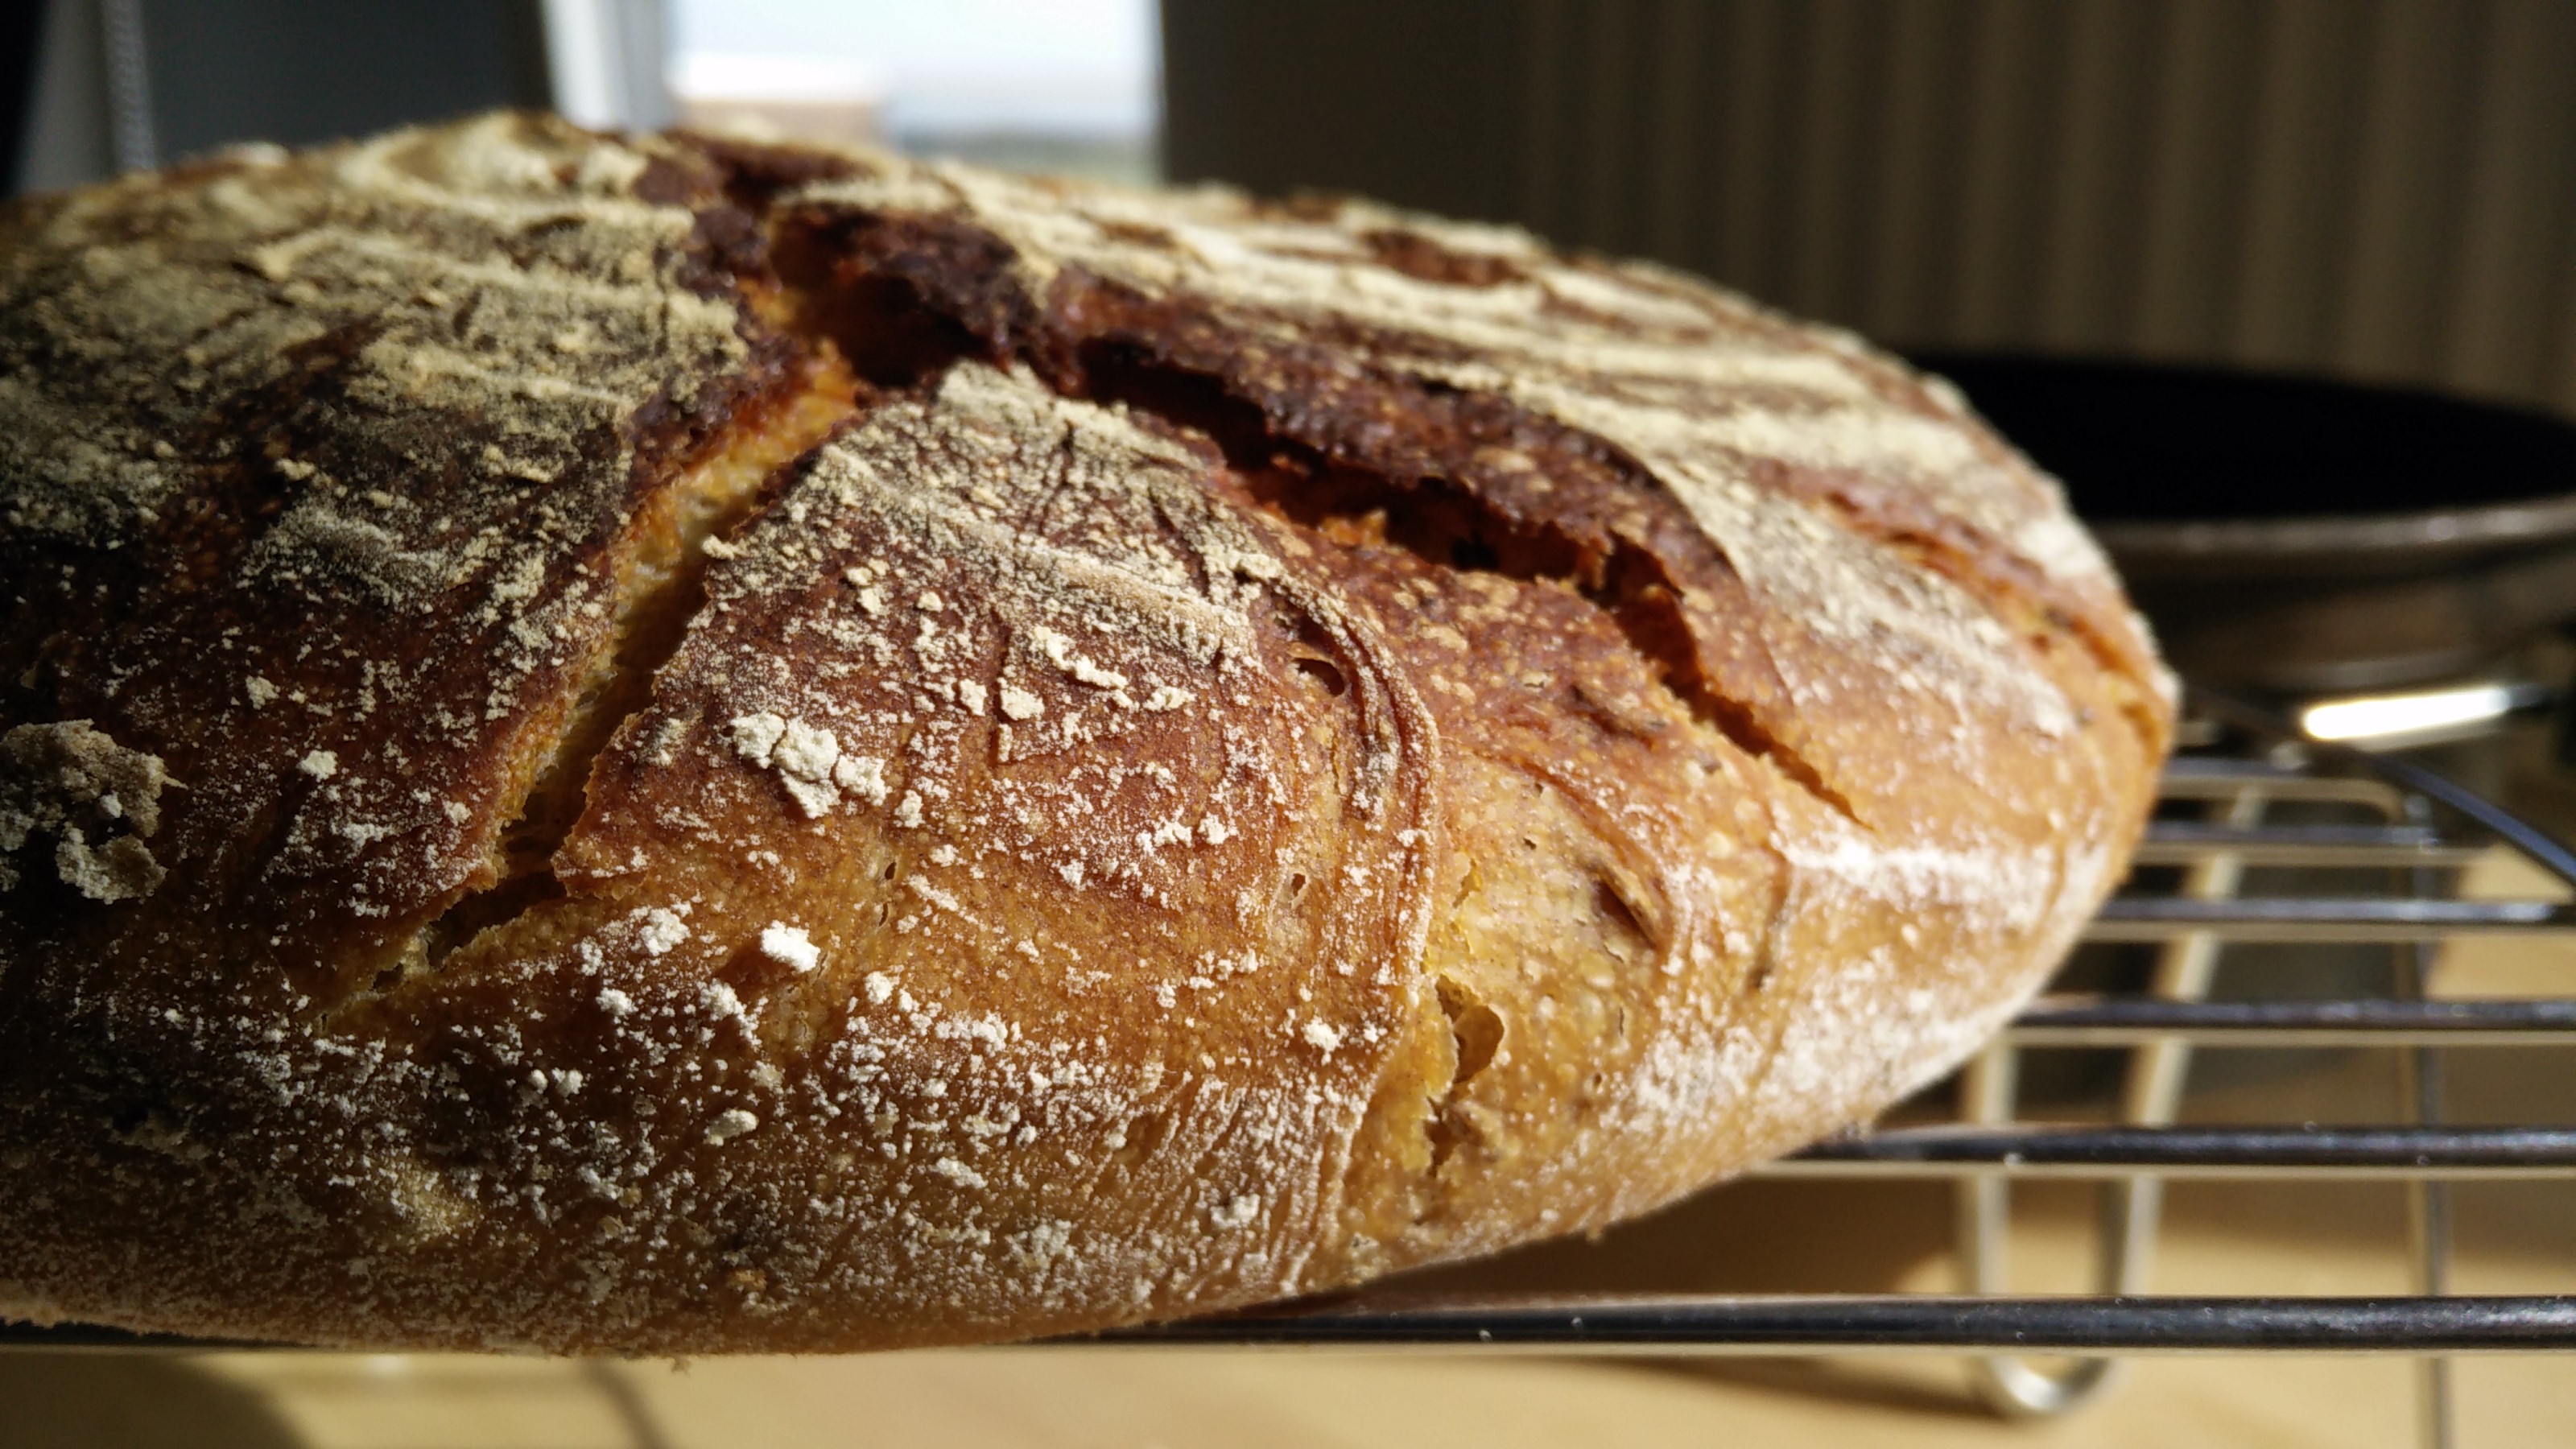 Bread photo data/2020-09-19/2020-09-19%2014.48.23%20cover.jpg